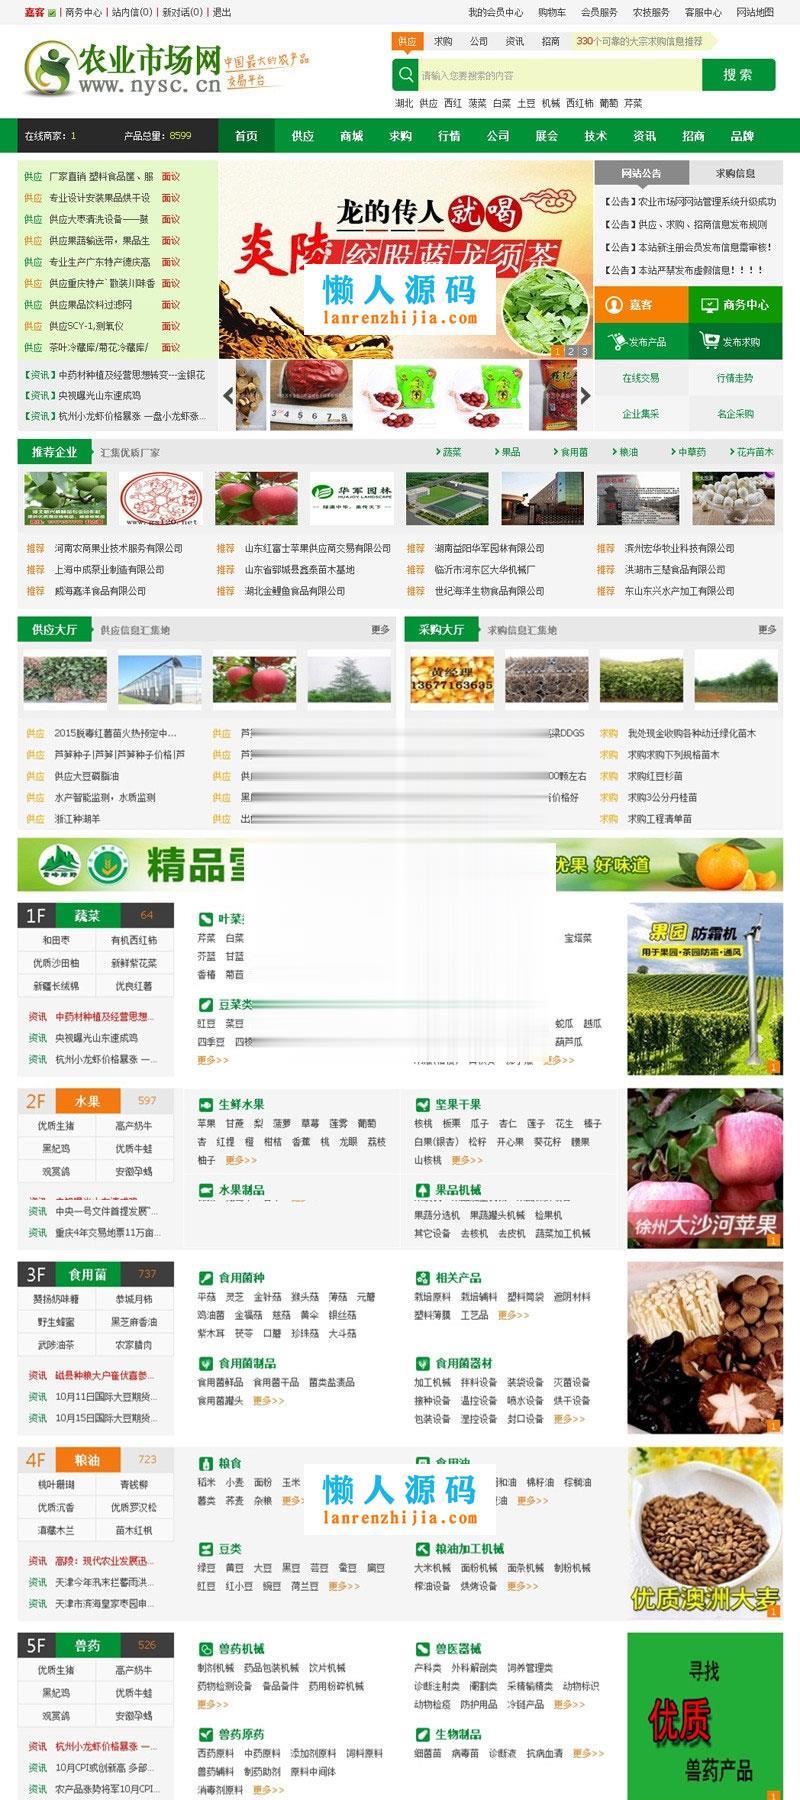 destoon6.0模板 仿绿色惠农网农业农产品交易平台网站源码 带手机WAP版-1